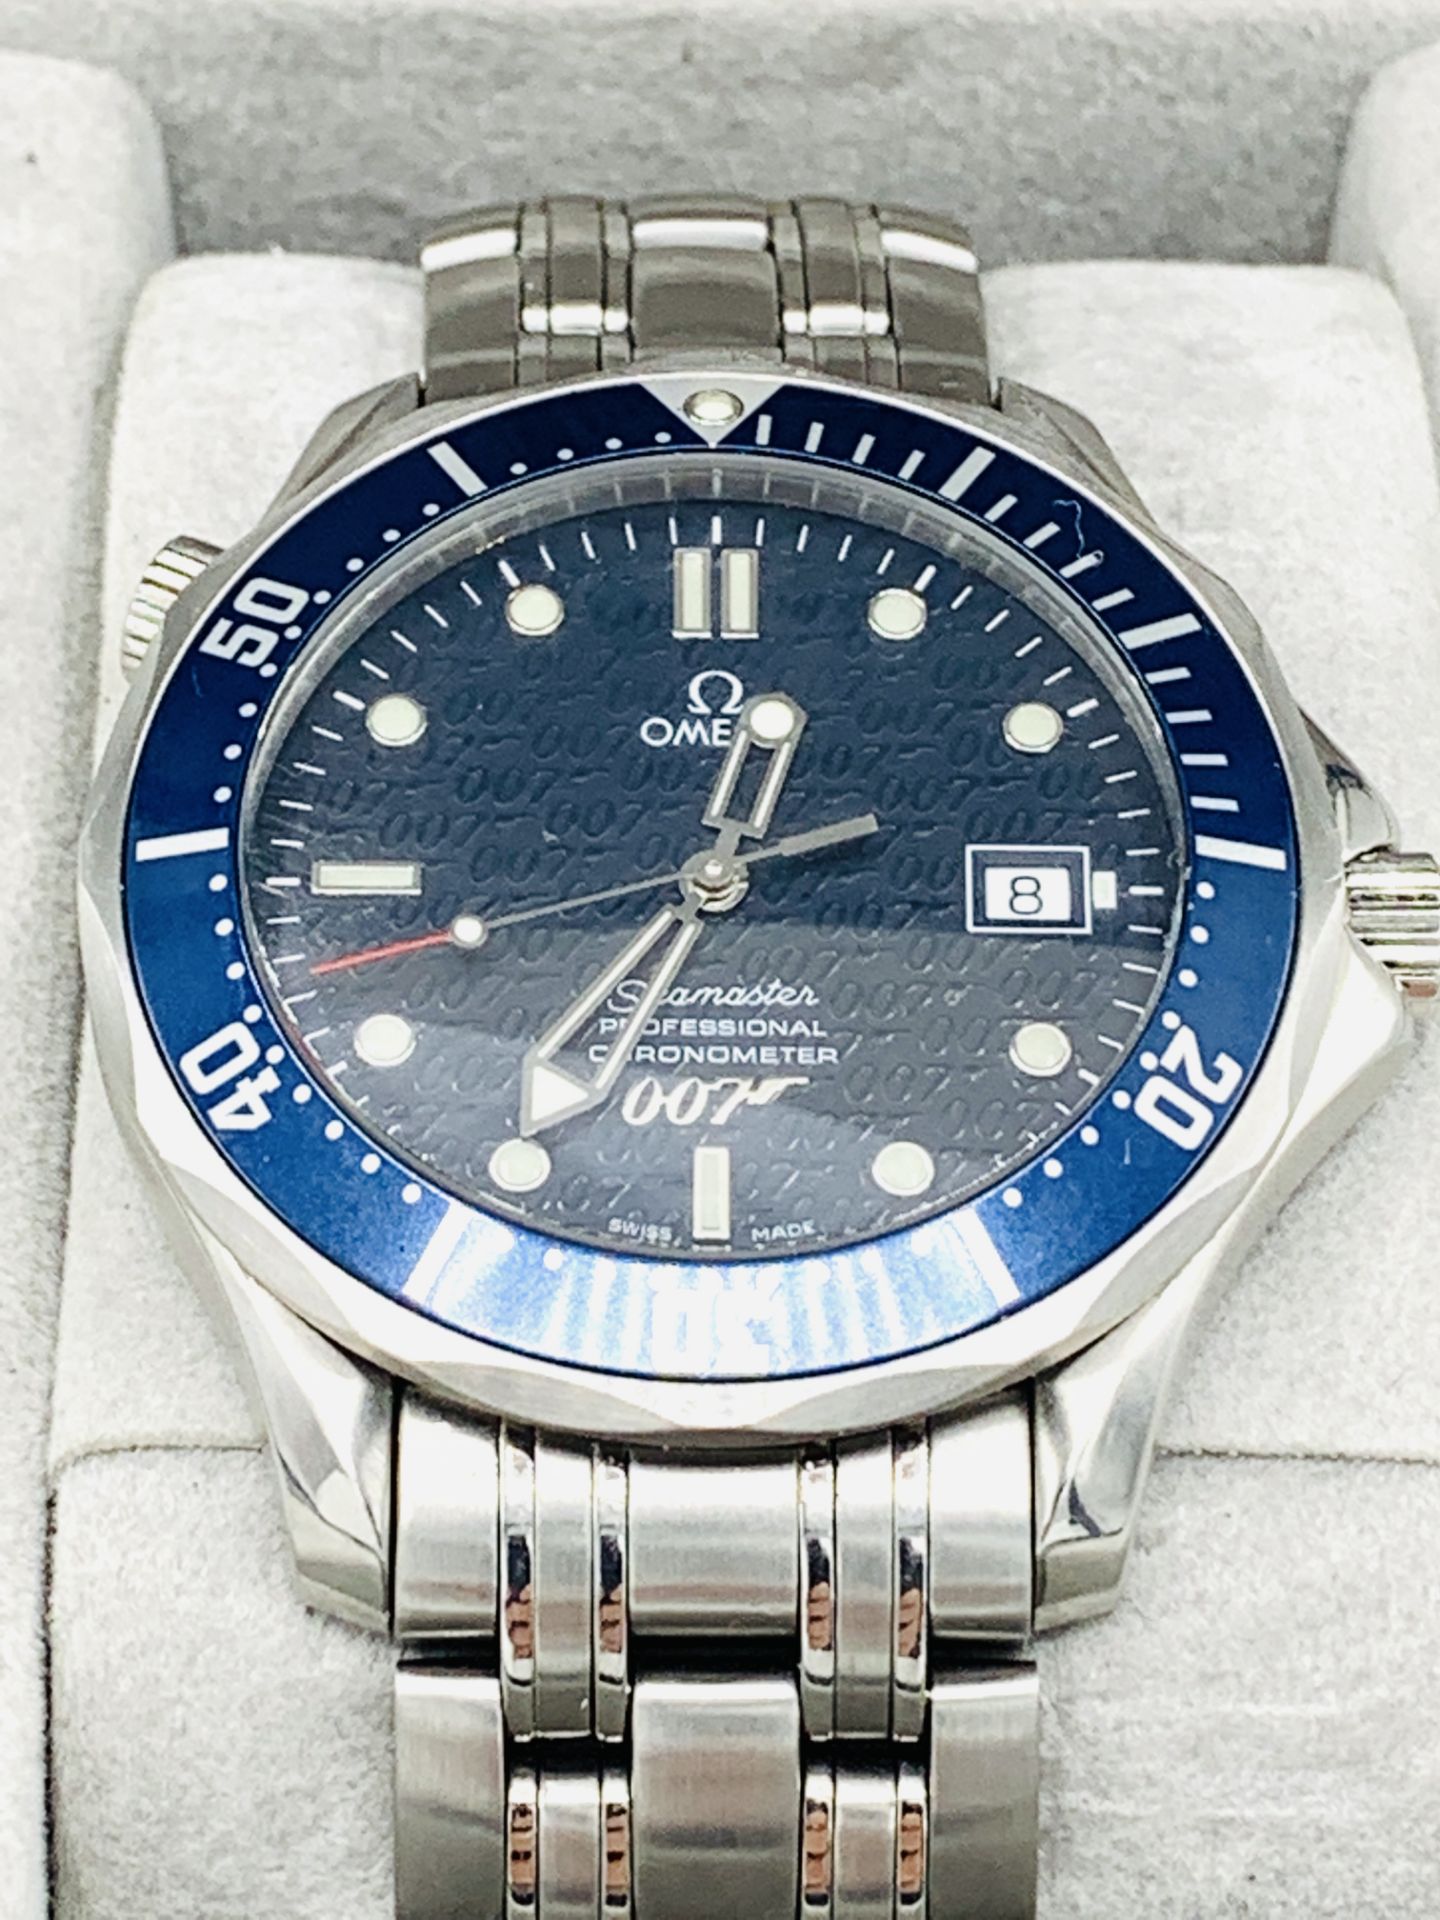 Omega Seamaster Professional Chronometer "40 years of James Bond" Limited Series - Image 2 of 10